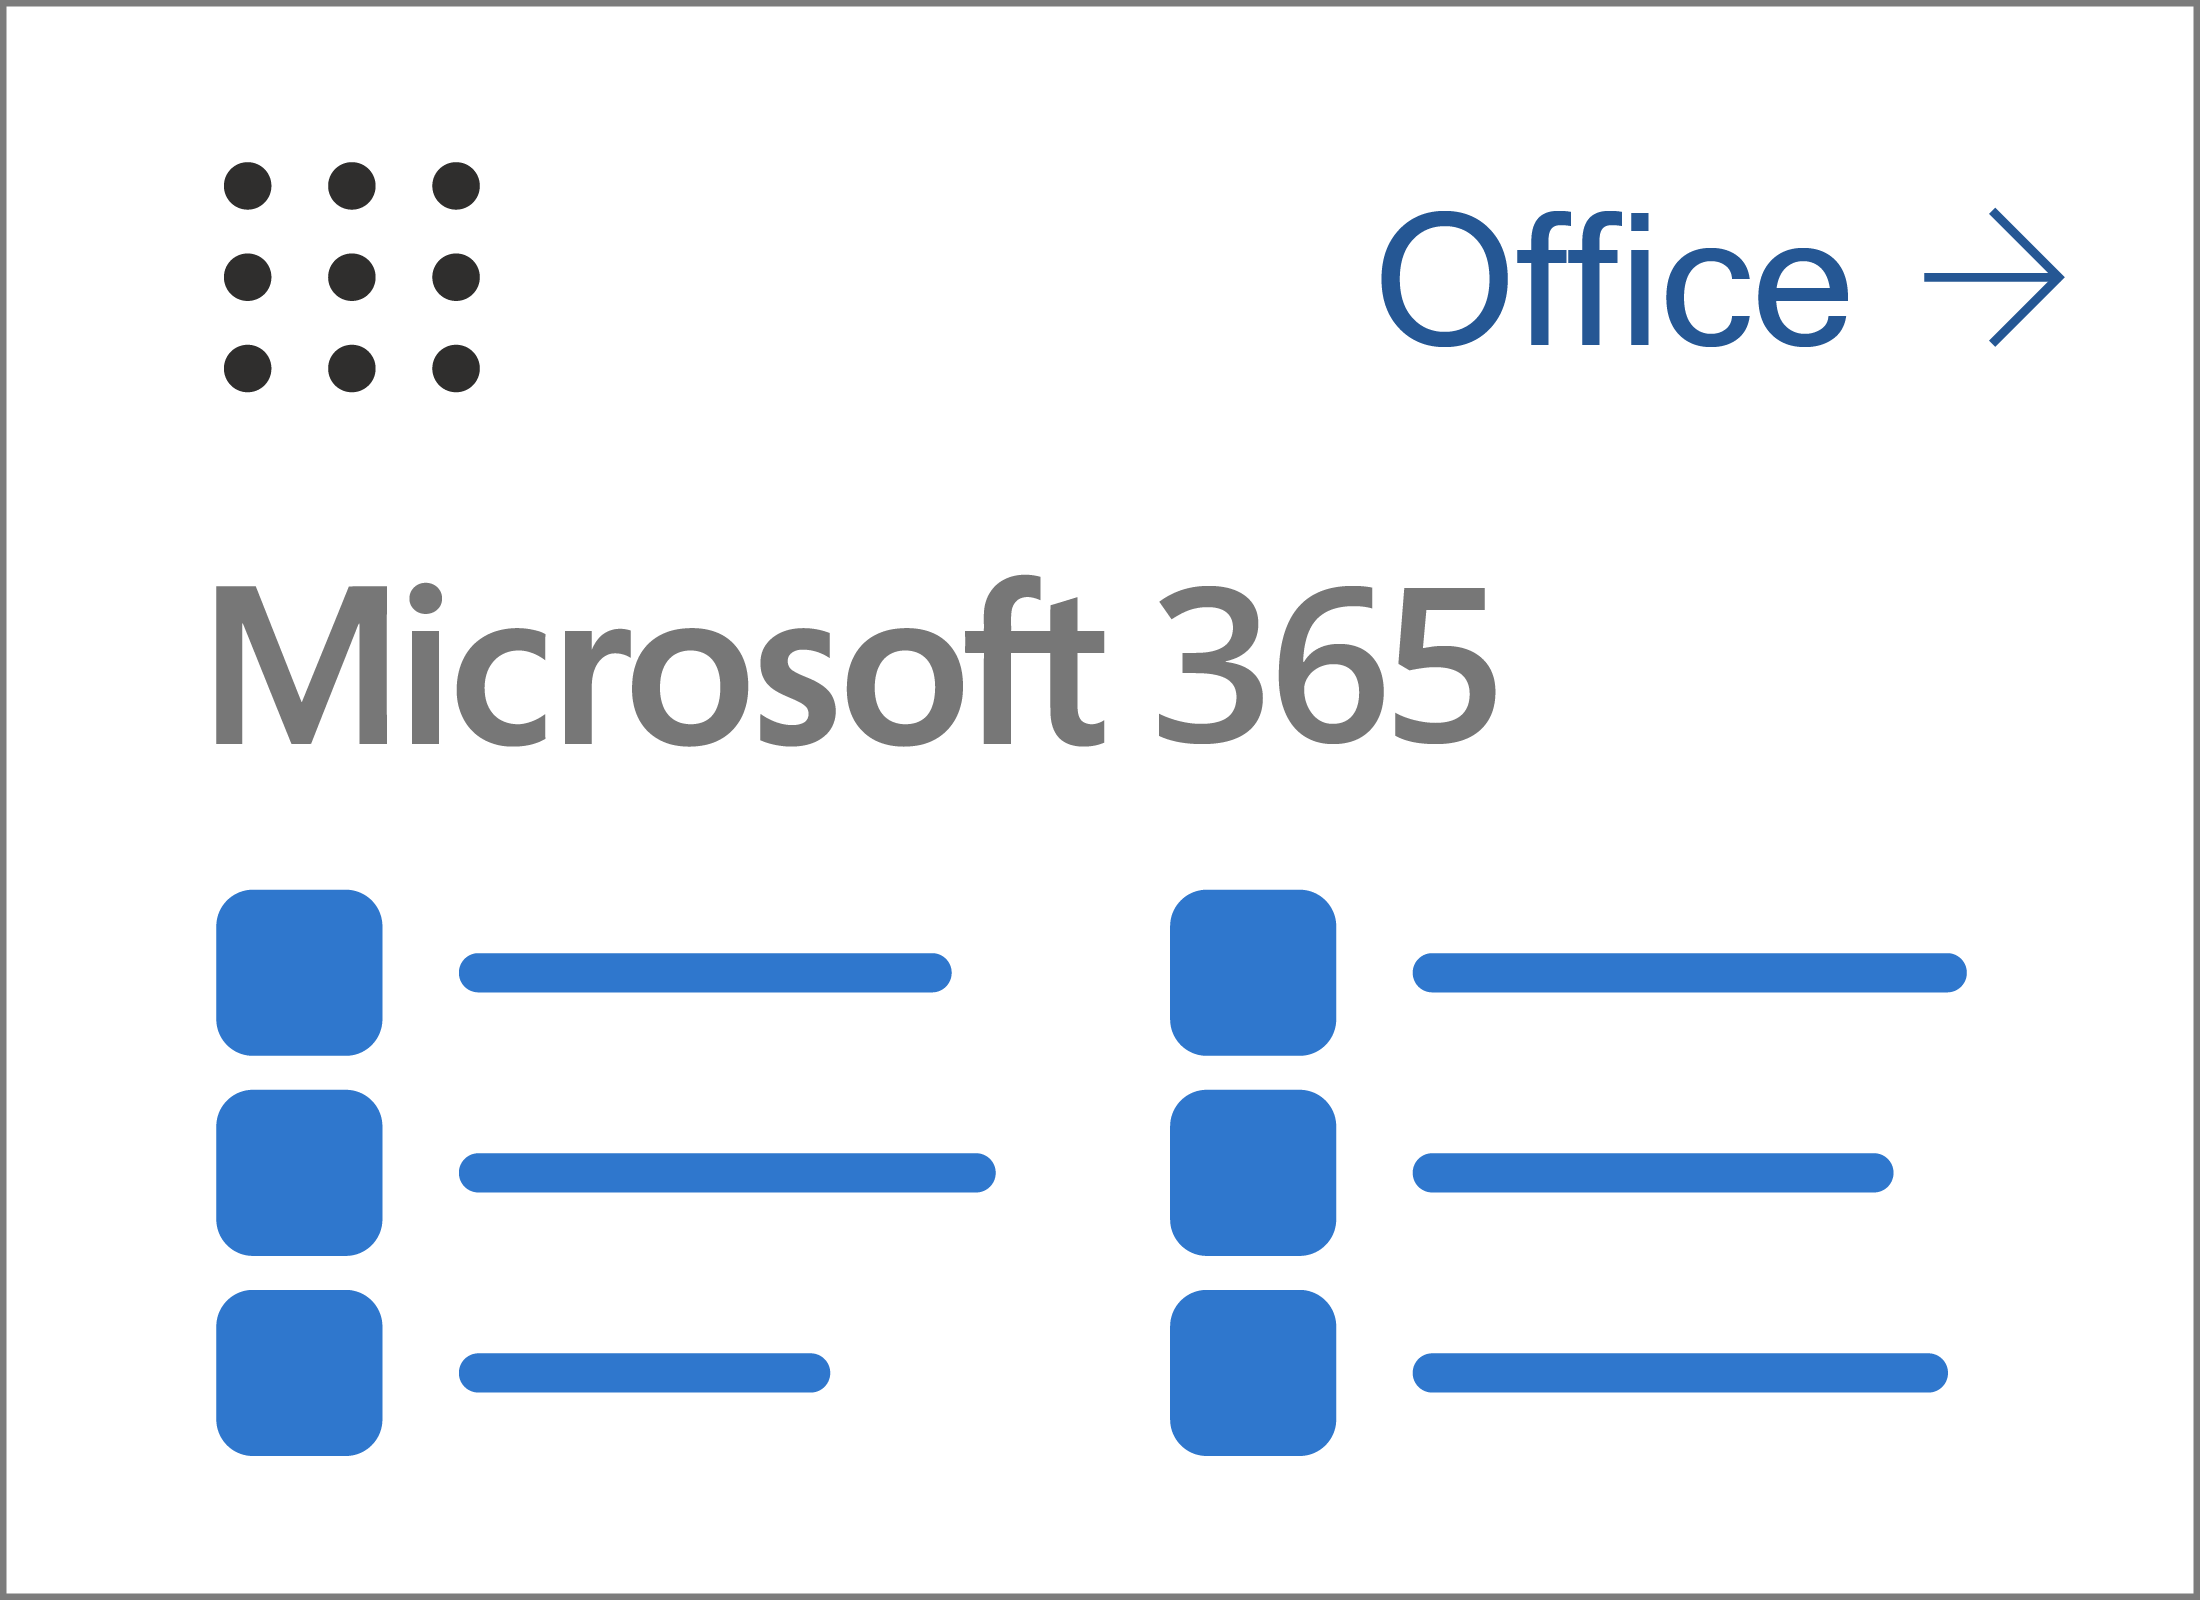 Ecosistema de Microsoft 365